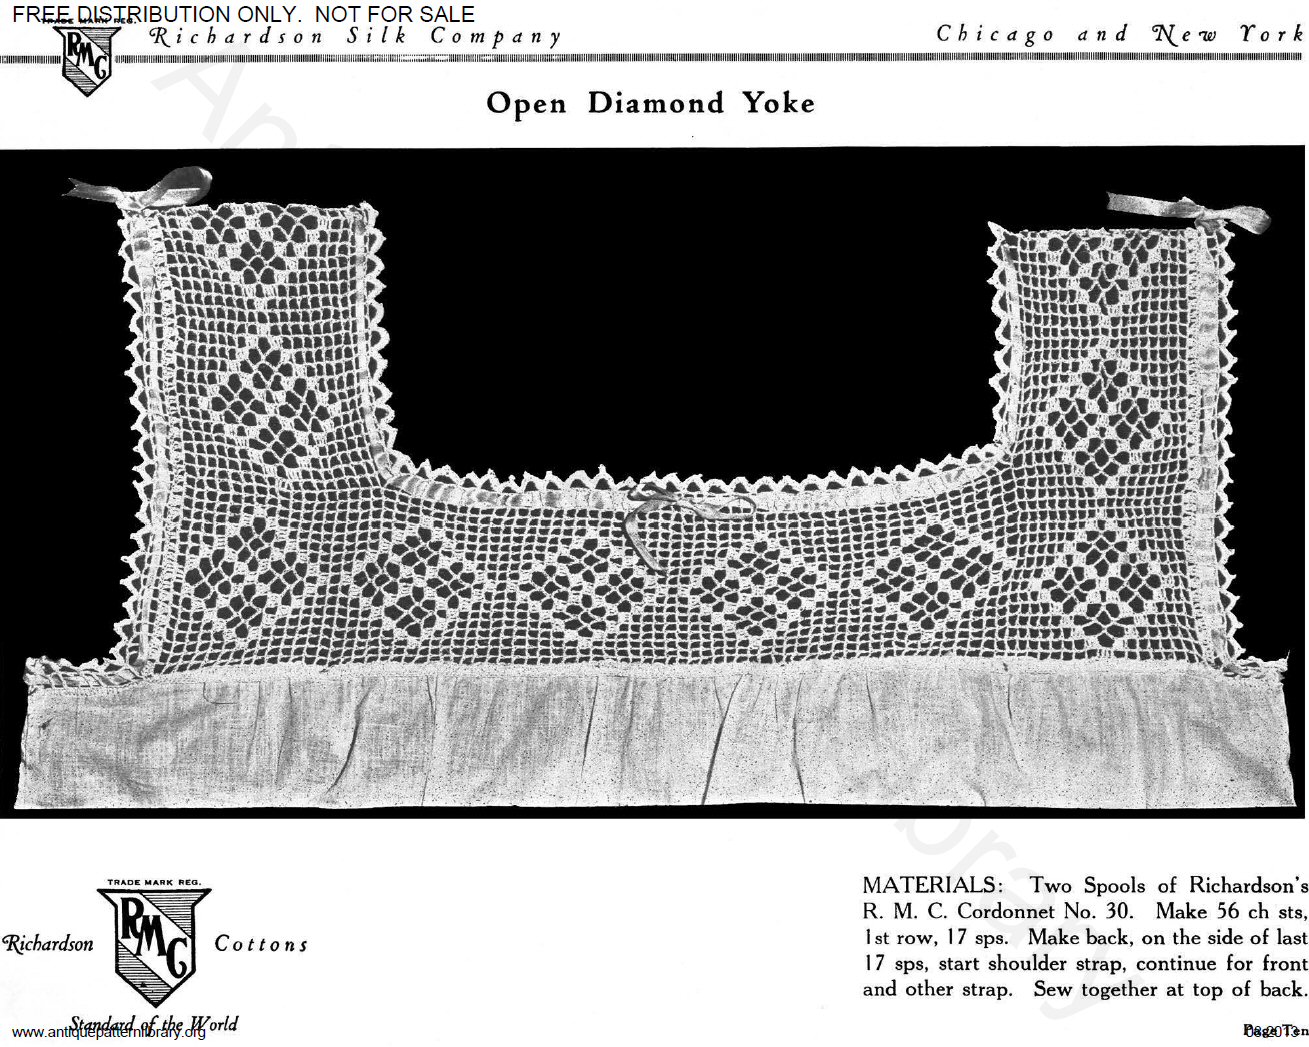 6-TA002 Richardson's Crochet Yokes